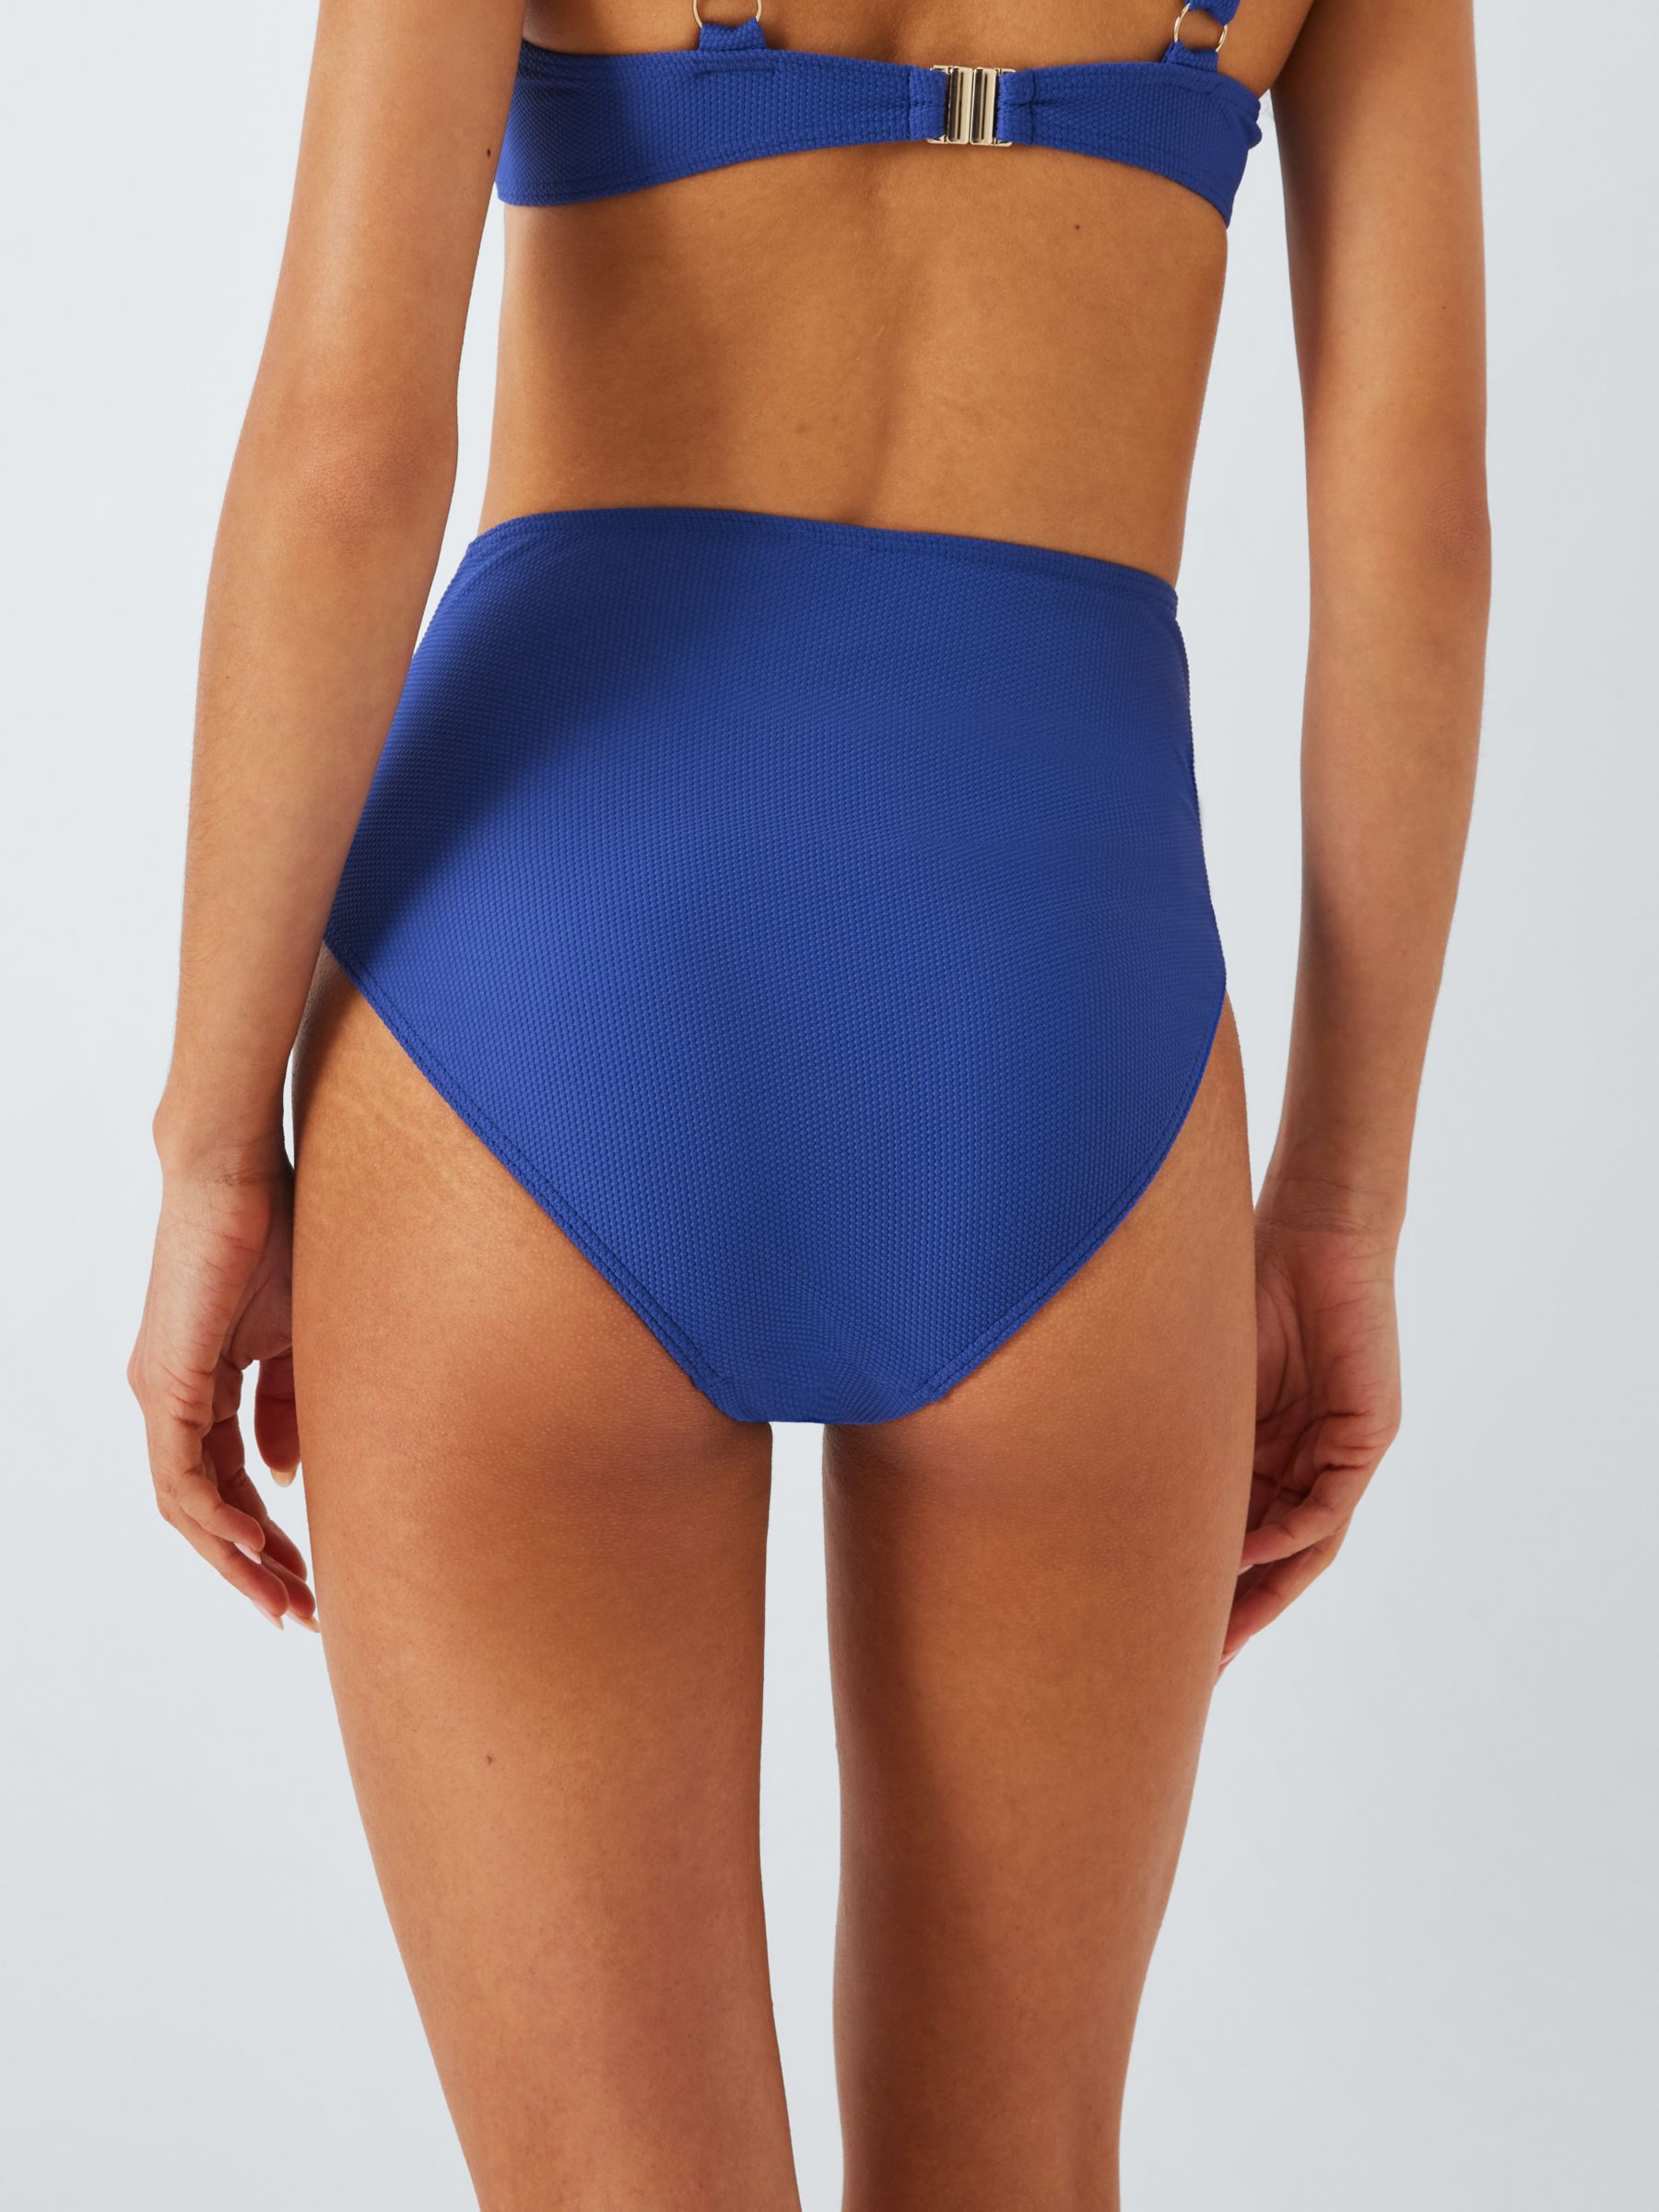 John Lewis Palma Textured High Waist Bikini Bottoms, Blue, 10